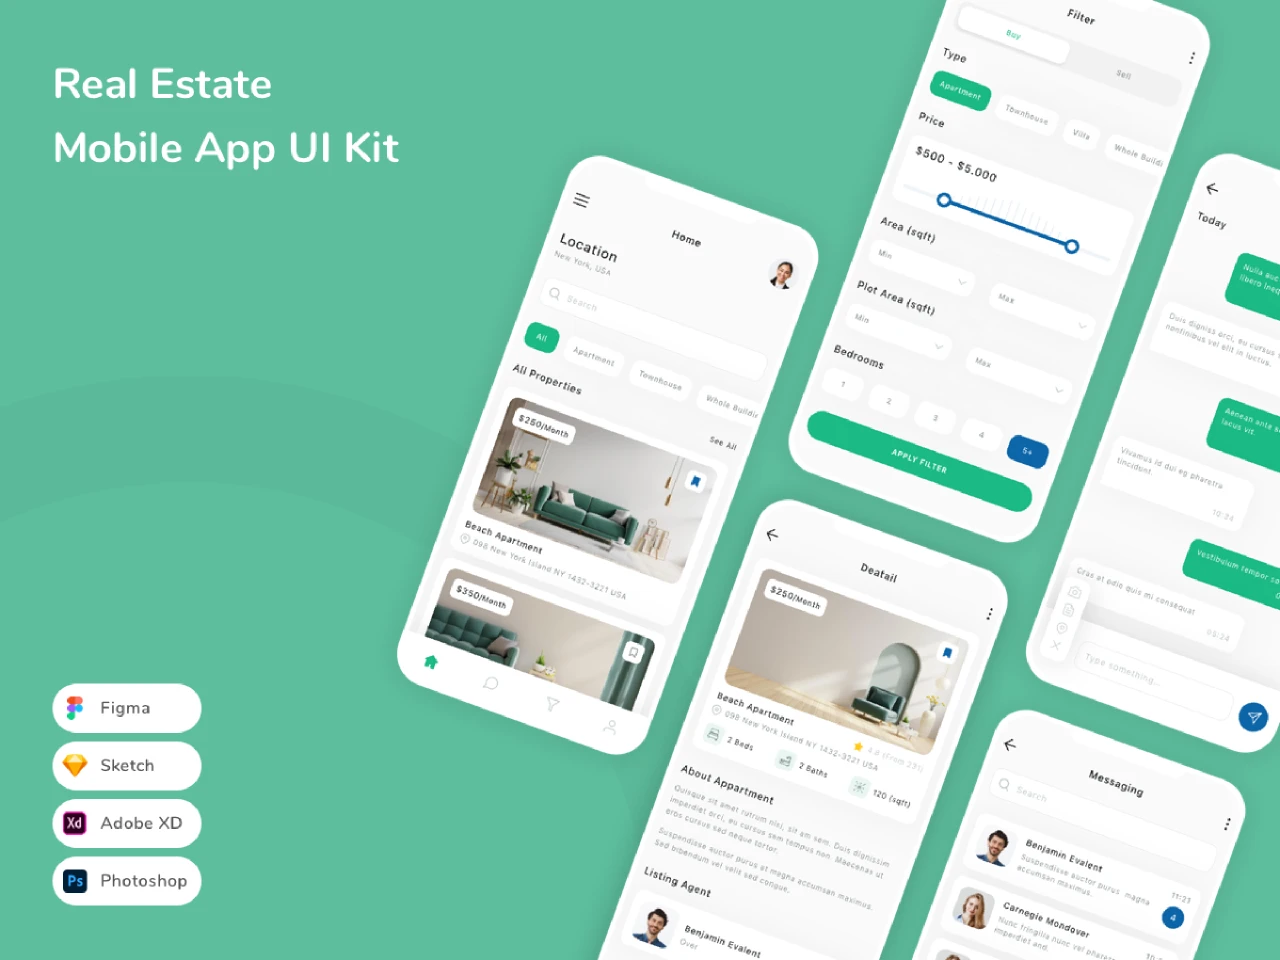 Real Estate Mobile App UI Kit for Figma and Adobe XD